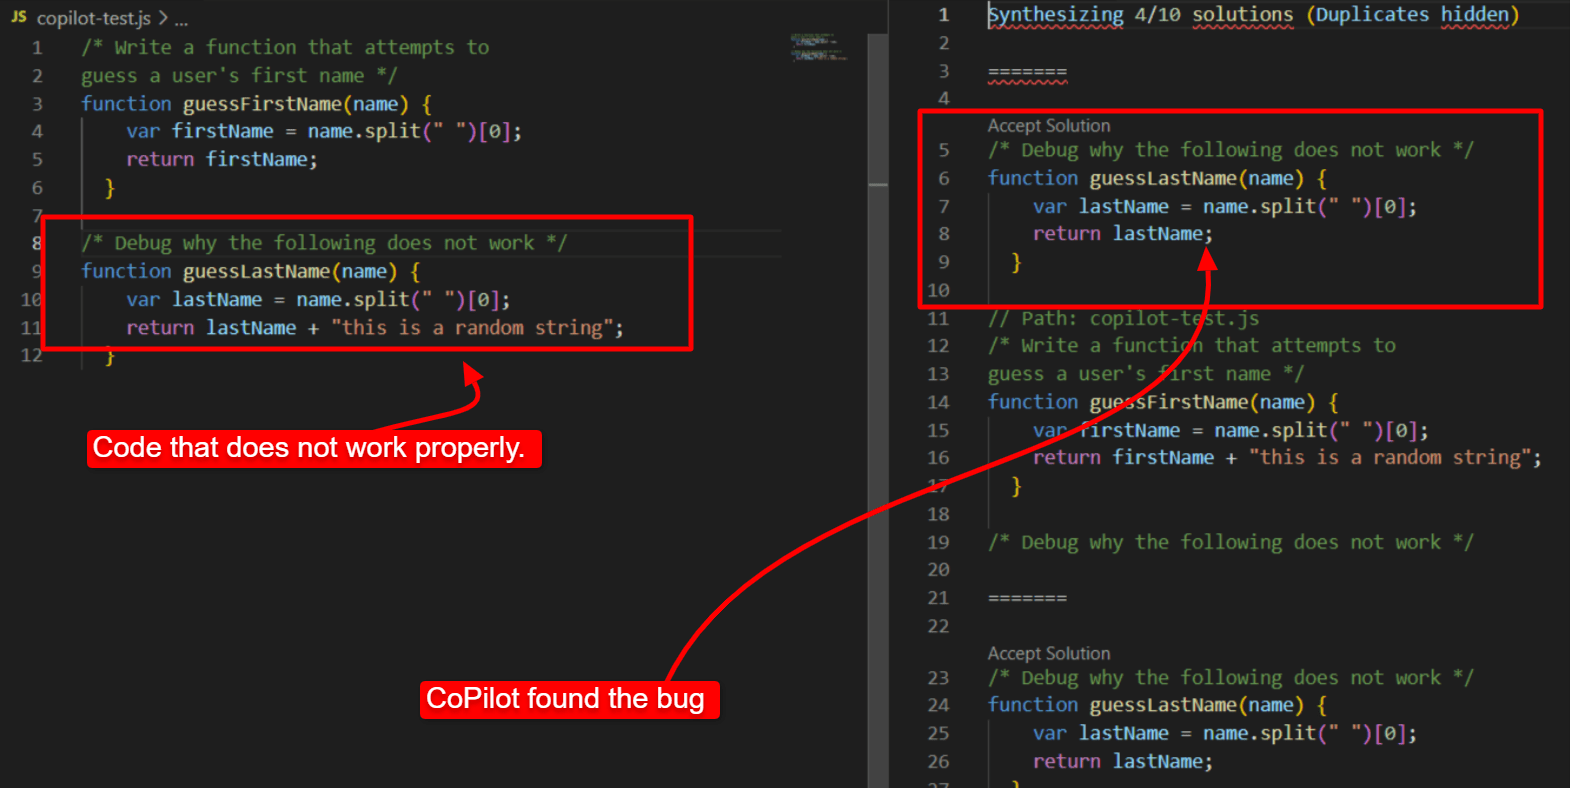 CoPilot correctly debugged some code. 